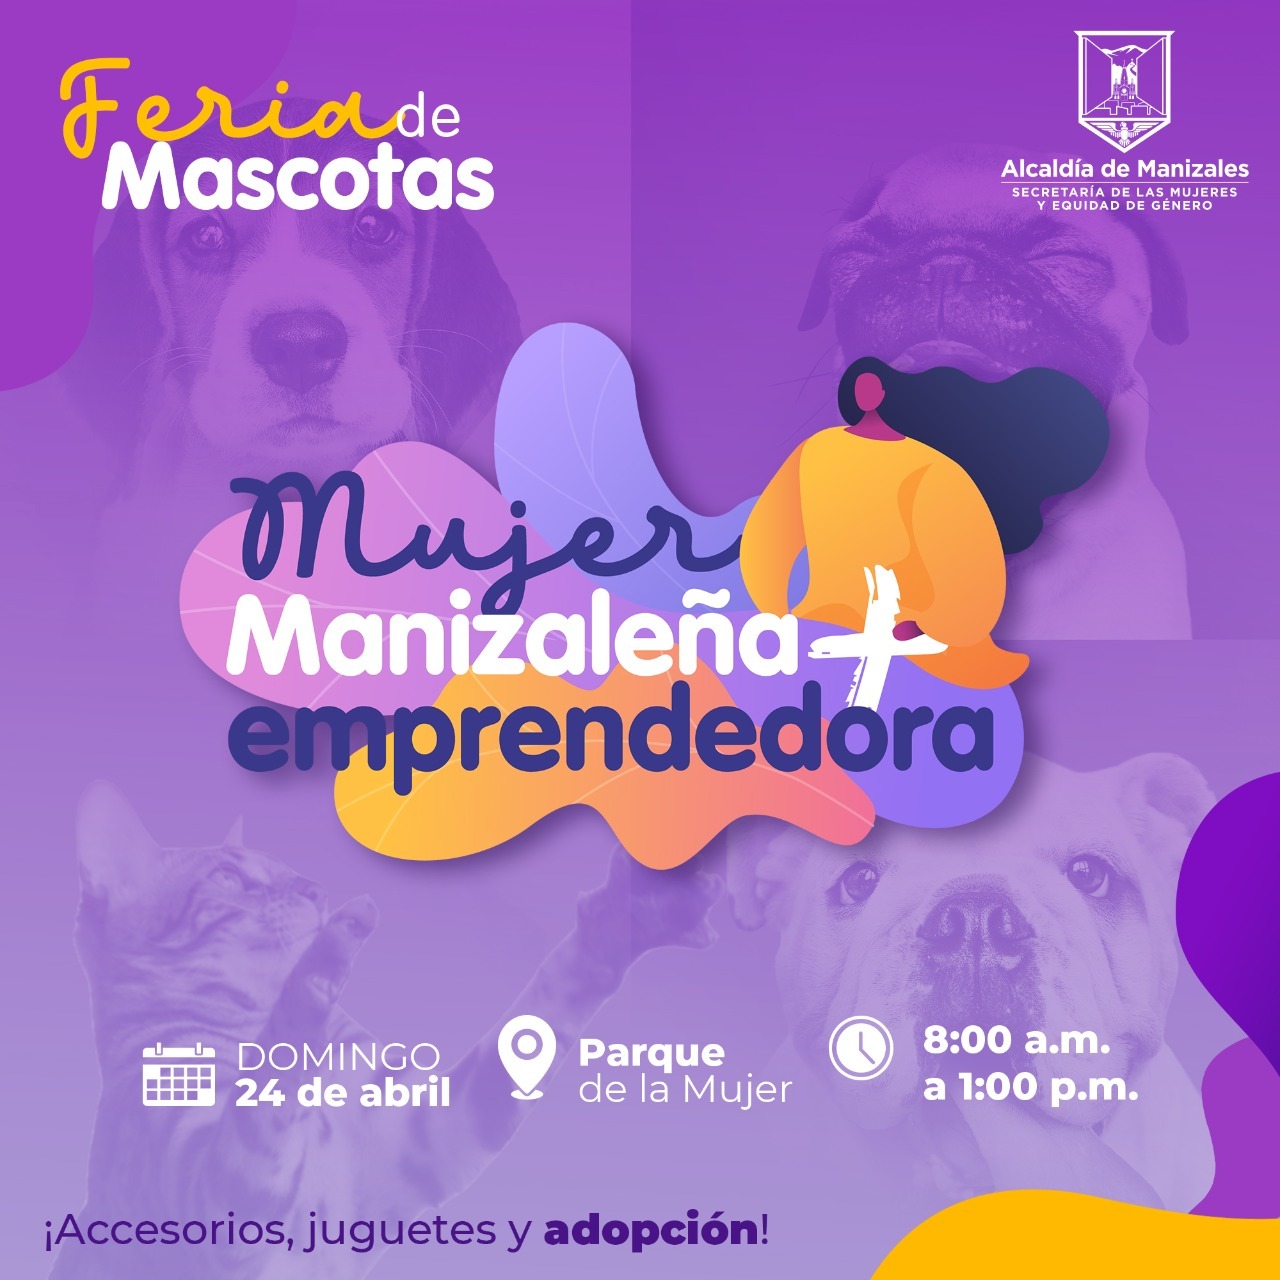 Asista mañana 24 de Abril a la Feria de Mascotas de Mujer Manizaleña + Emprendedora